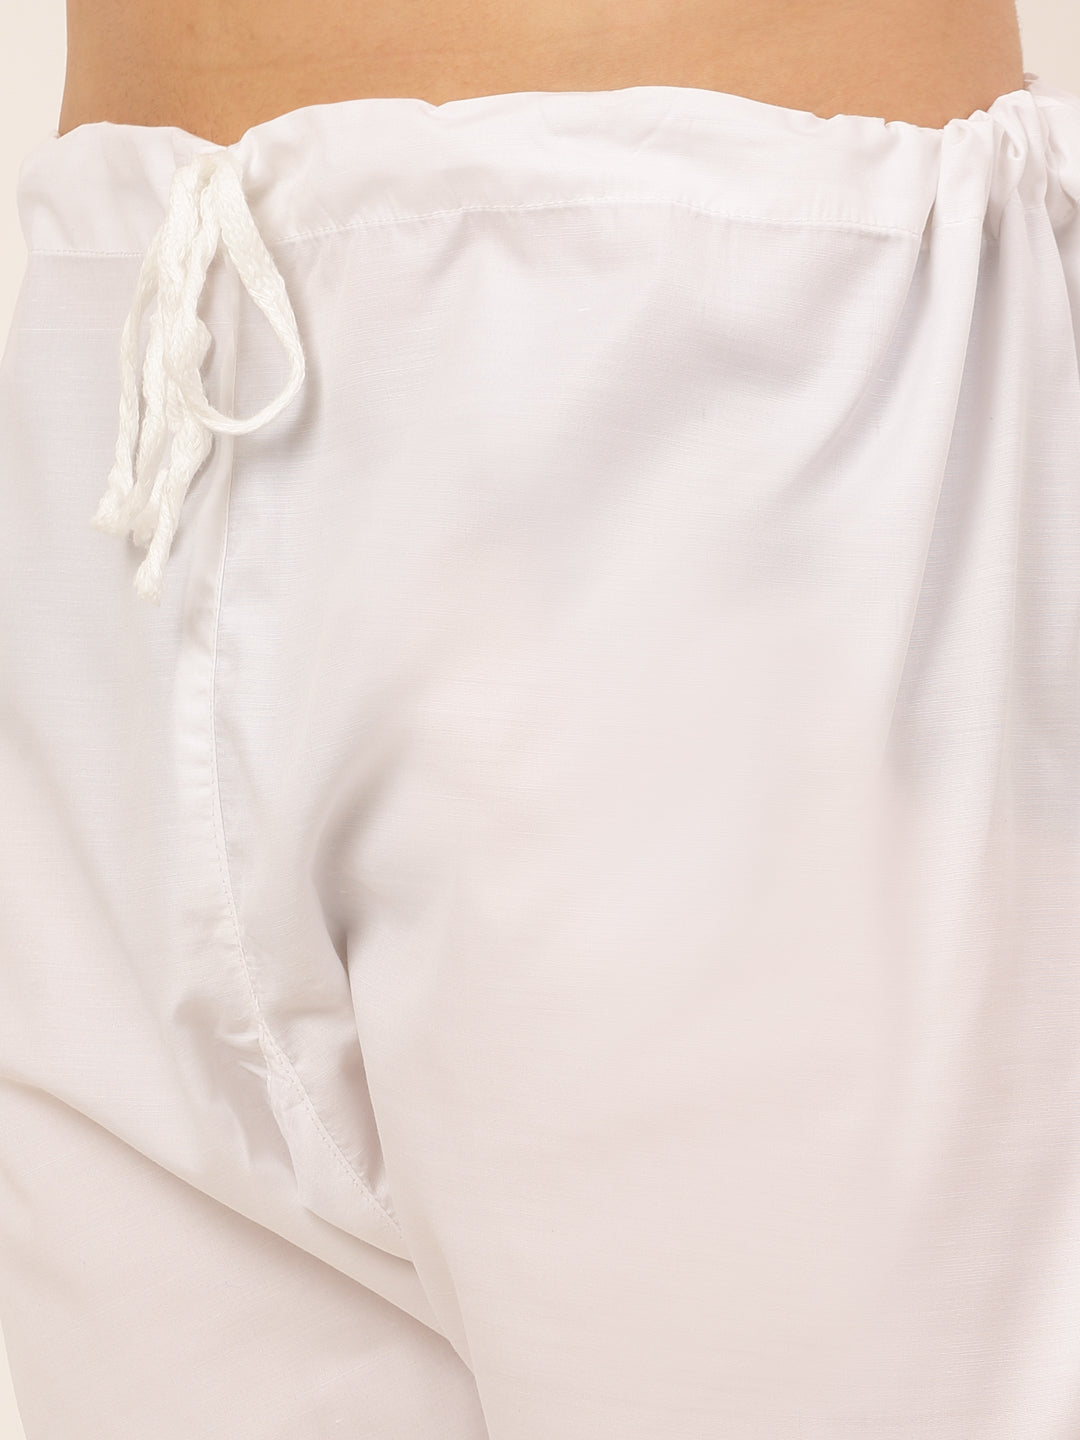 Men's Pink & White Embroidered Straight Kurta Pyjama Set ( Jokp 626 Pink ) - Virat Fashions